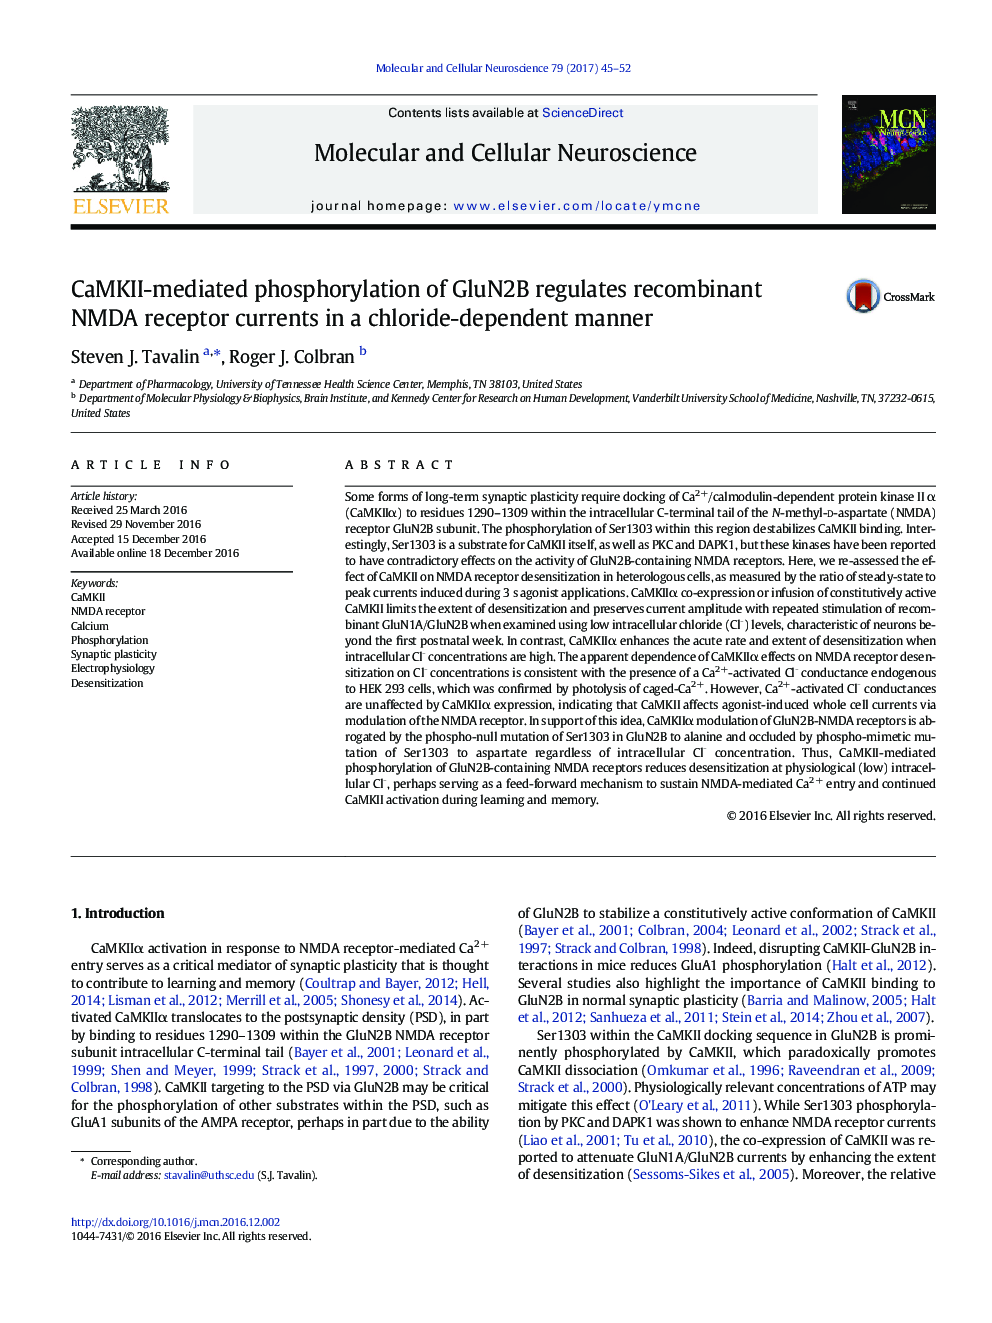 CaMKII-mediated phosphorylation of GluN2B regulates recombinant NMDA receptor currents in a chloride-dependent manner